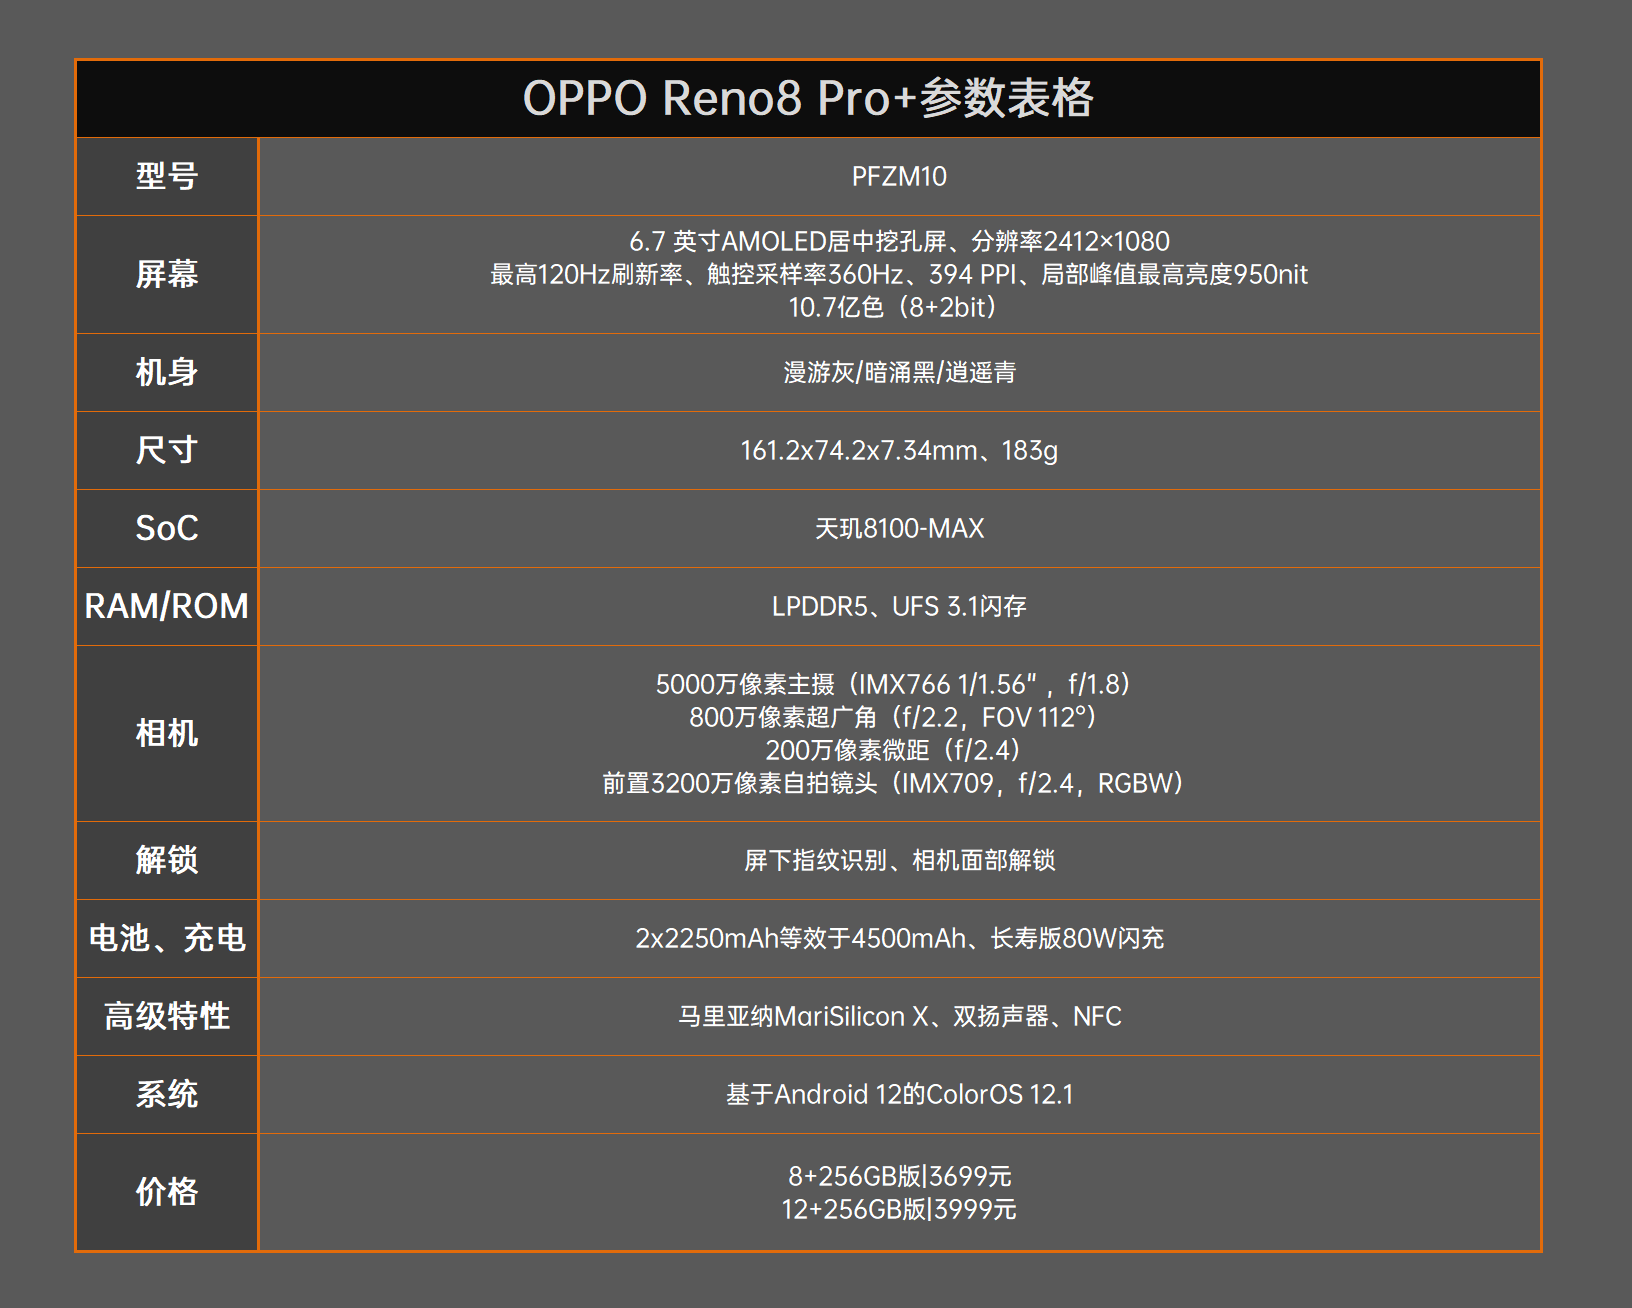 OPPO Reno 8 Pro+評測：精致如碧玉 有顏有雙芯